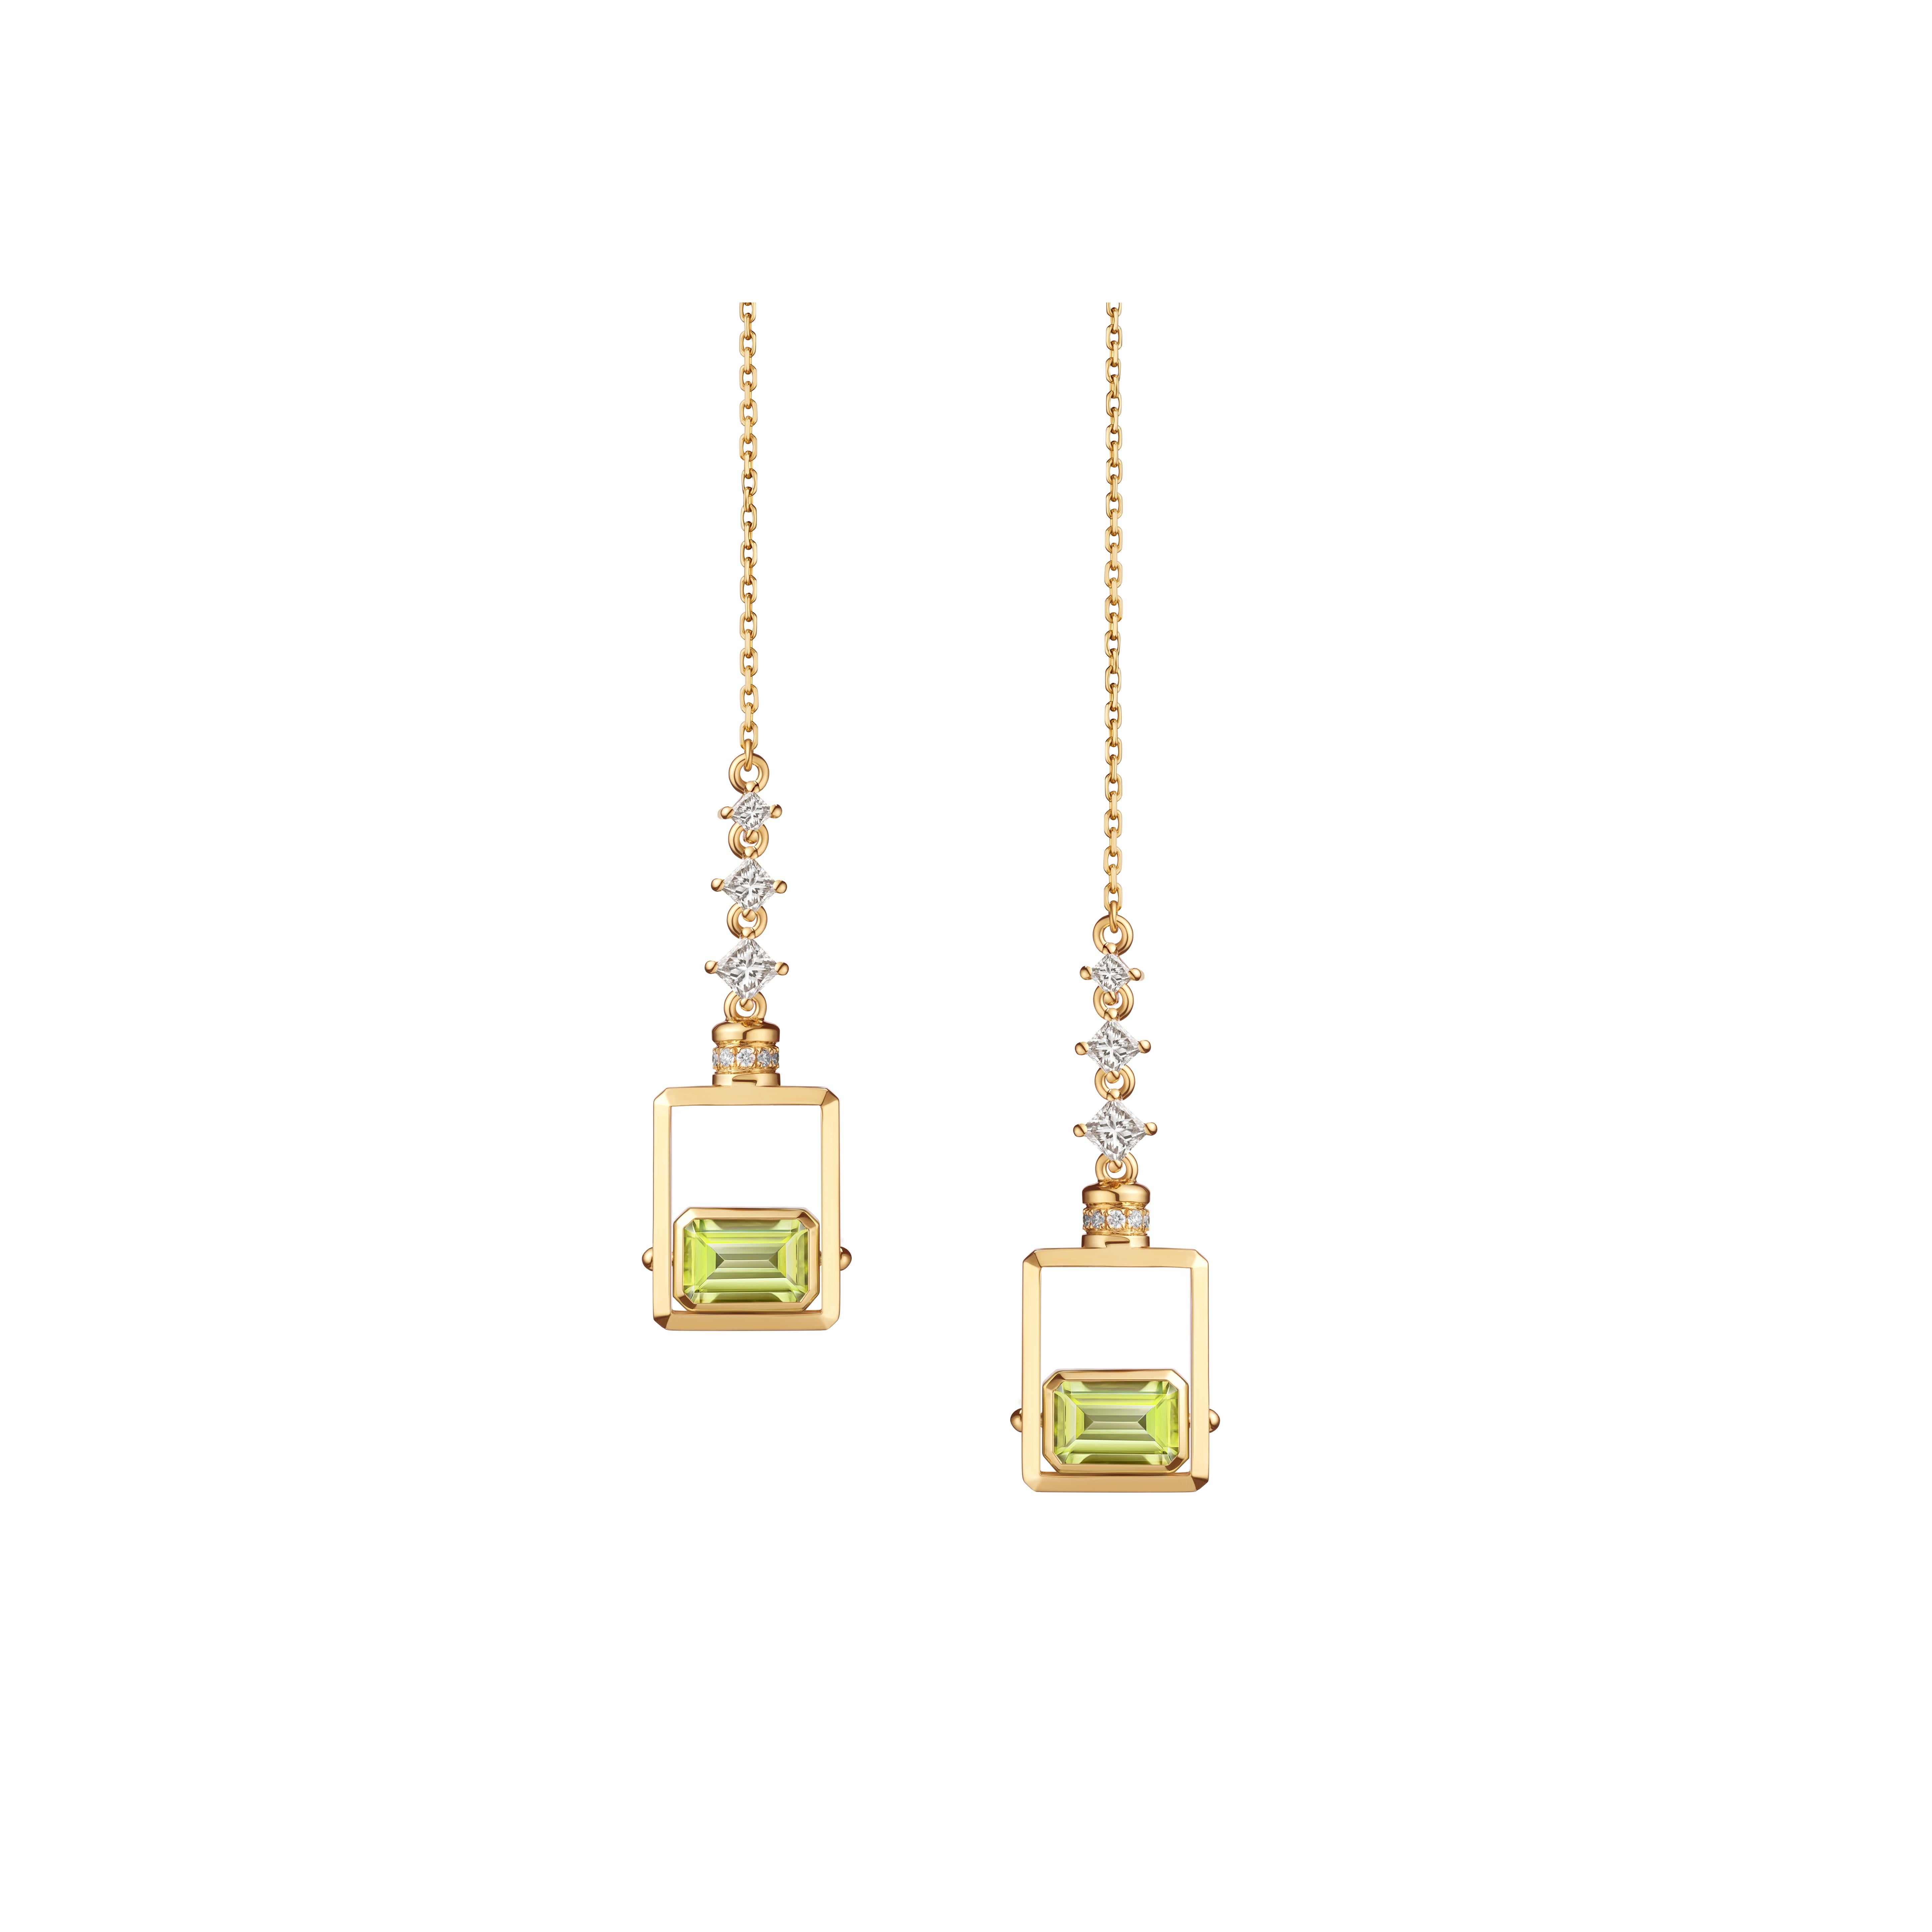 Art of Travel "Gem Perfume" Chain Earrings 18k Yellow Gold Green Peridot Diamond For Sale